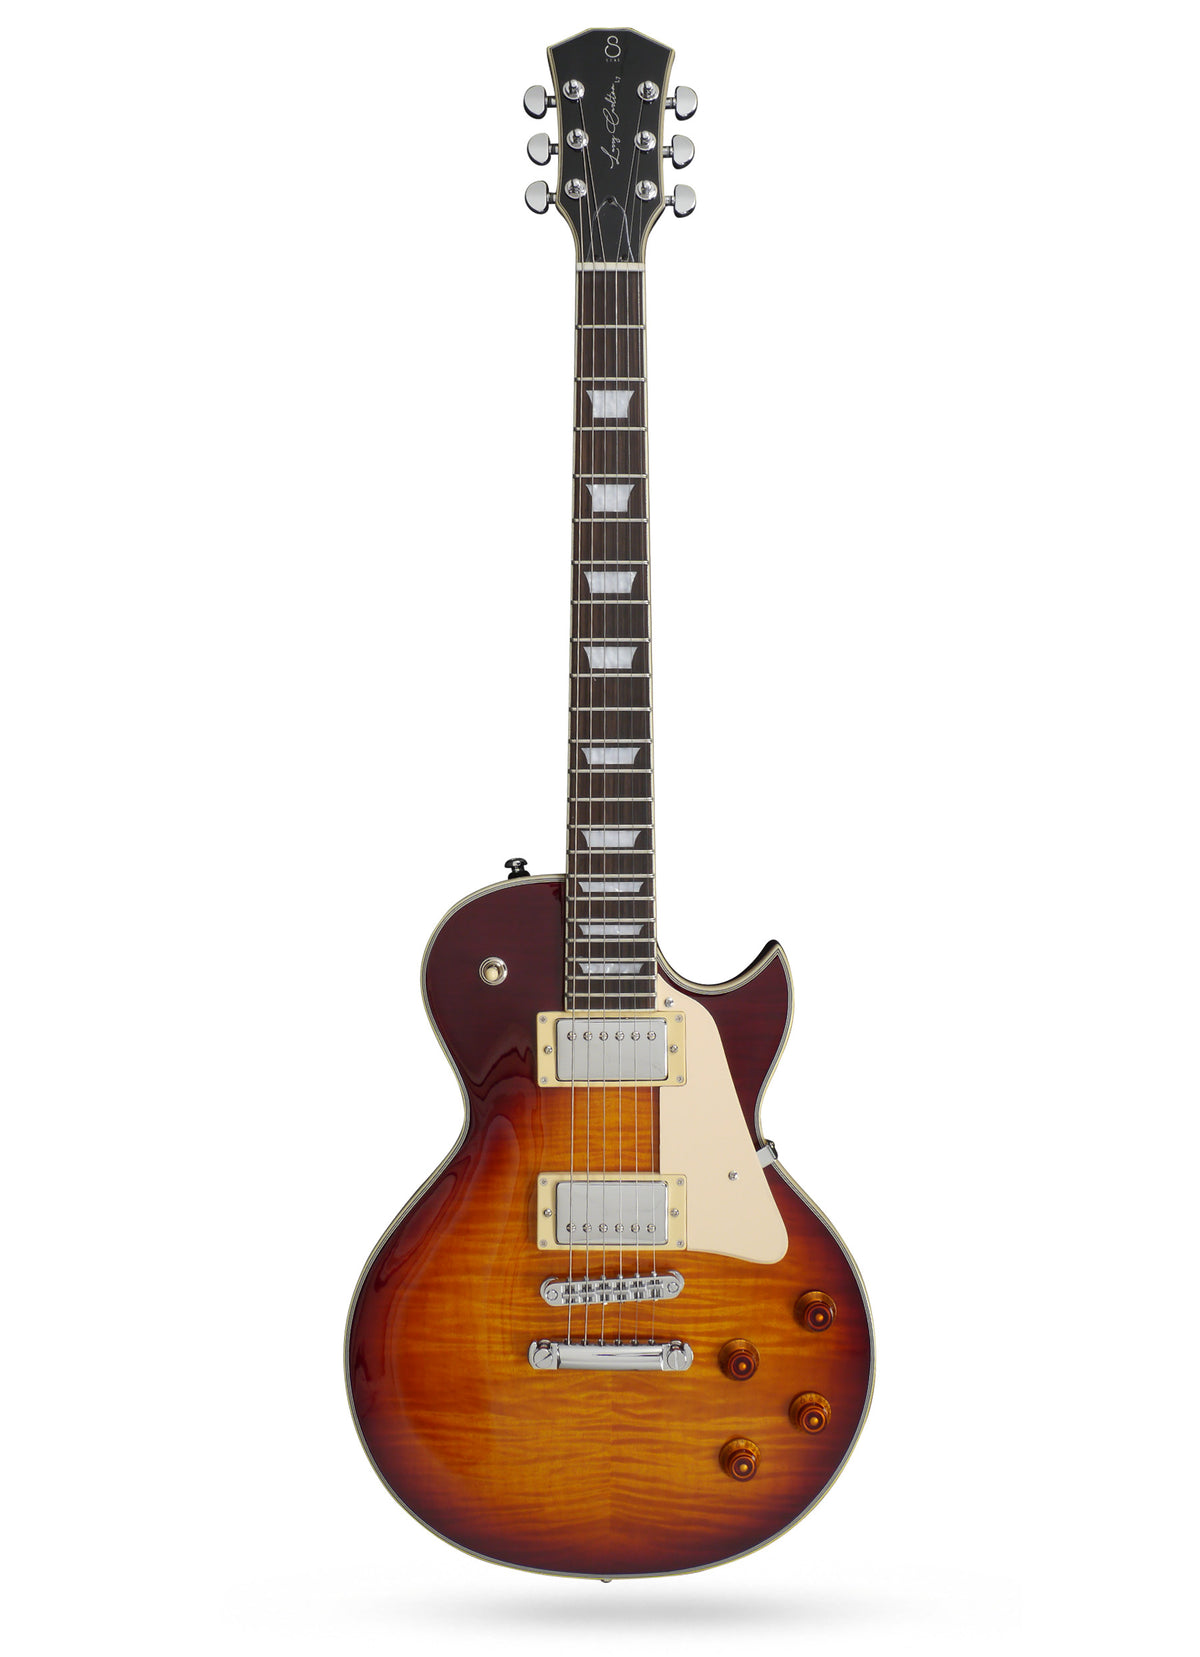 Larry Carlton L7-TS Sire Electric Guitar Flamed Maple - Tobacco Sunburst